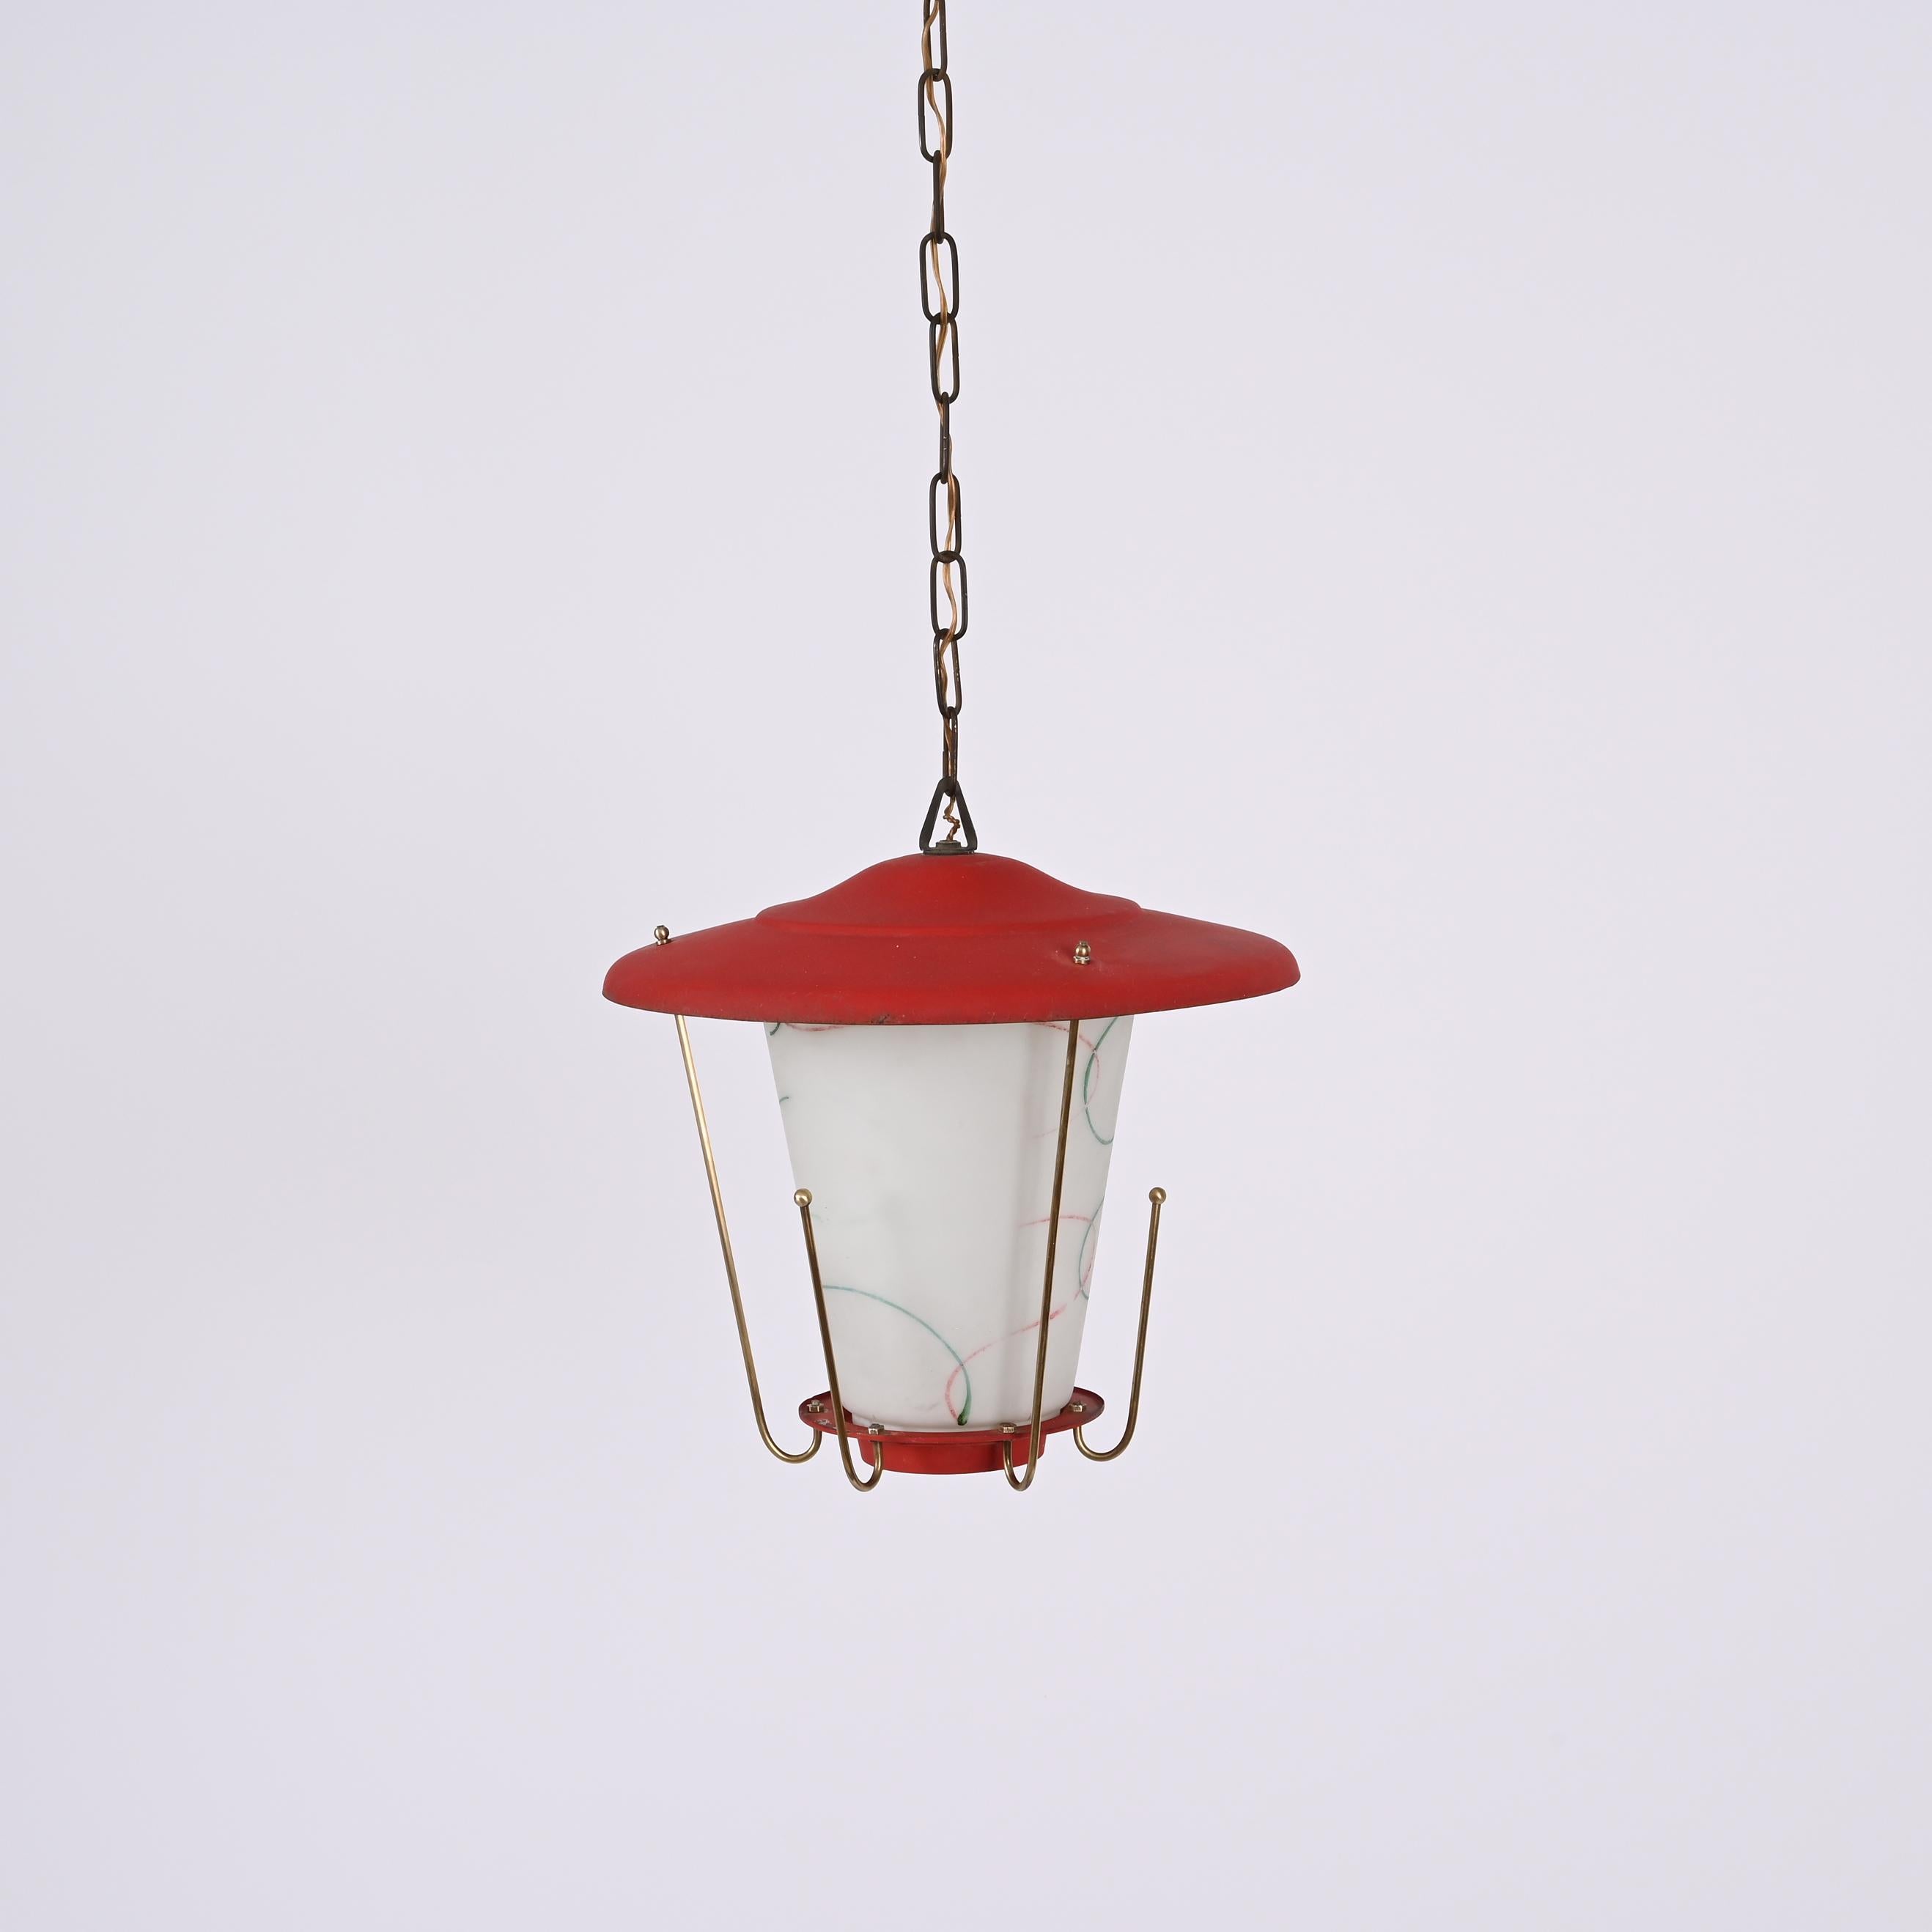 Midcentury Round Opaline Glass and Brass Italian Red Lantern Chandelier, 1950s For Sale 4